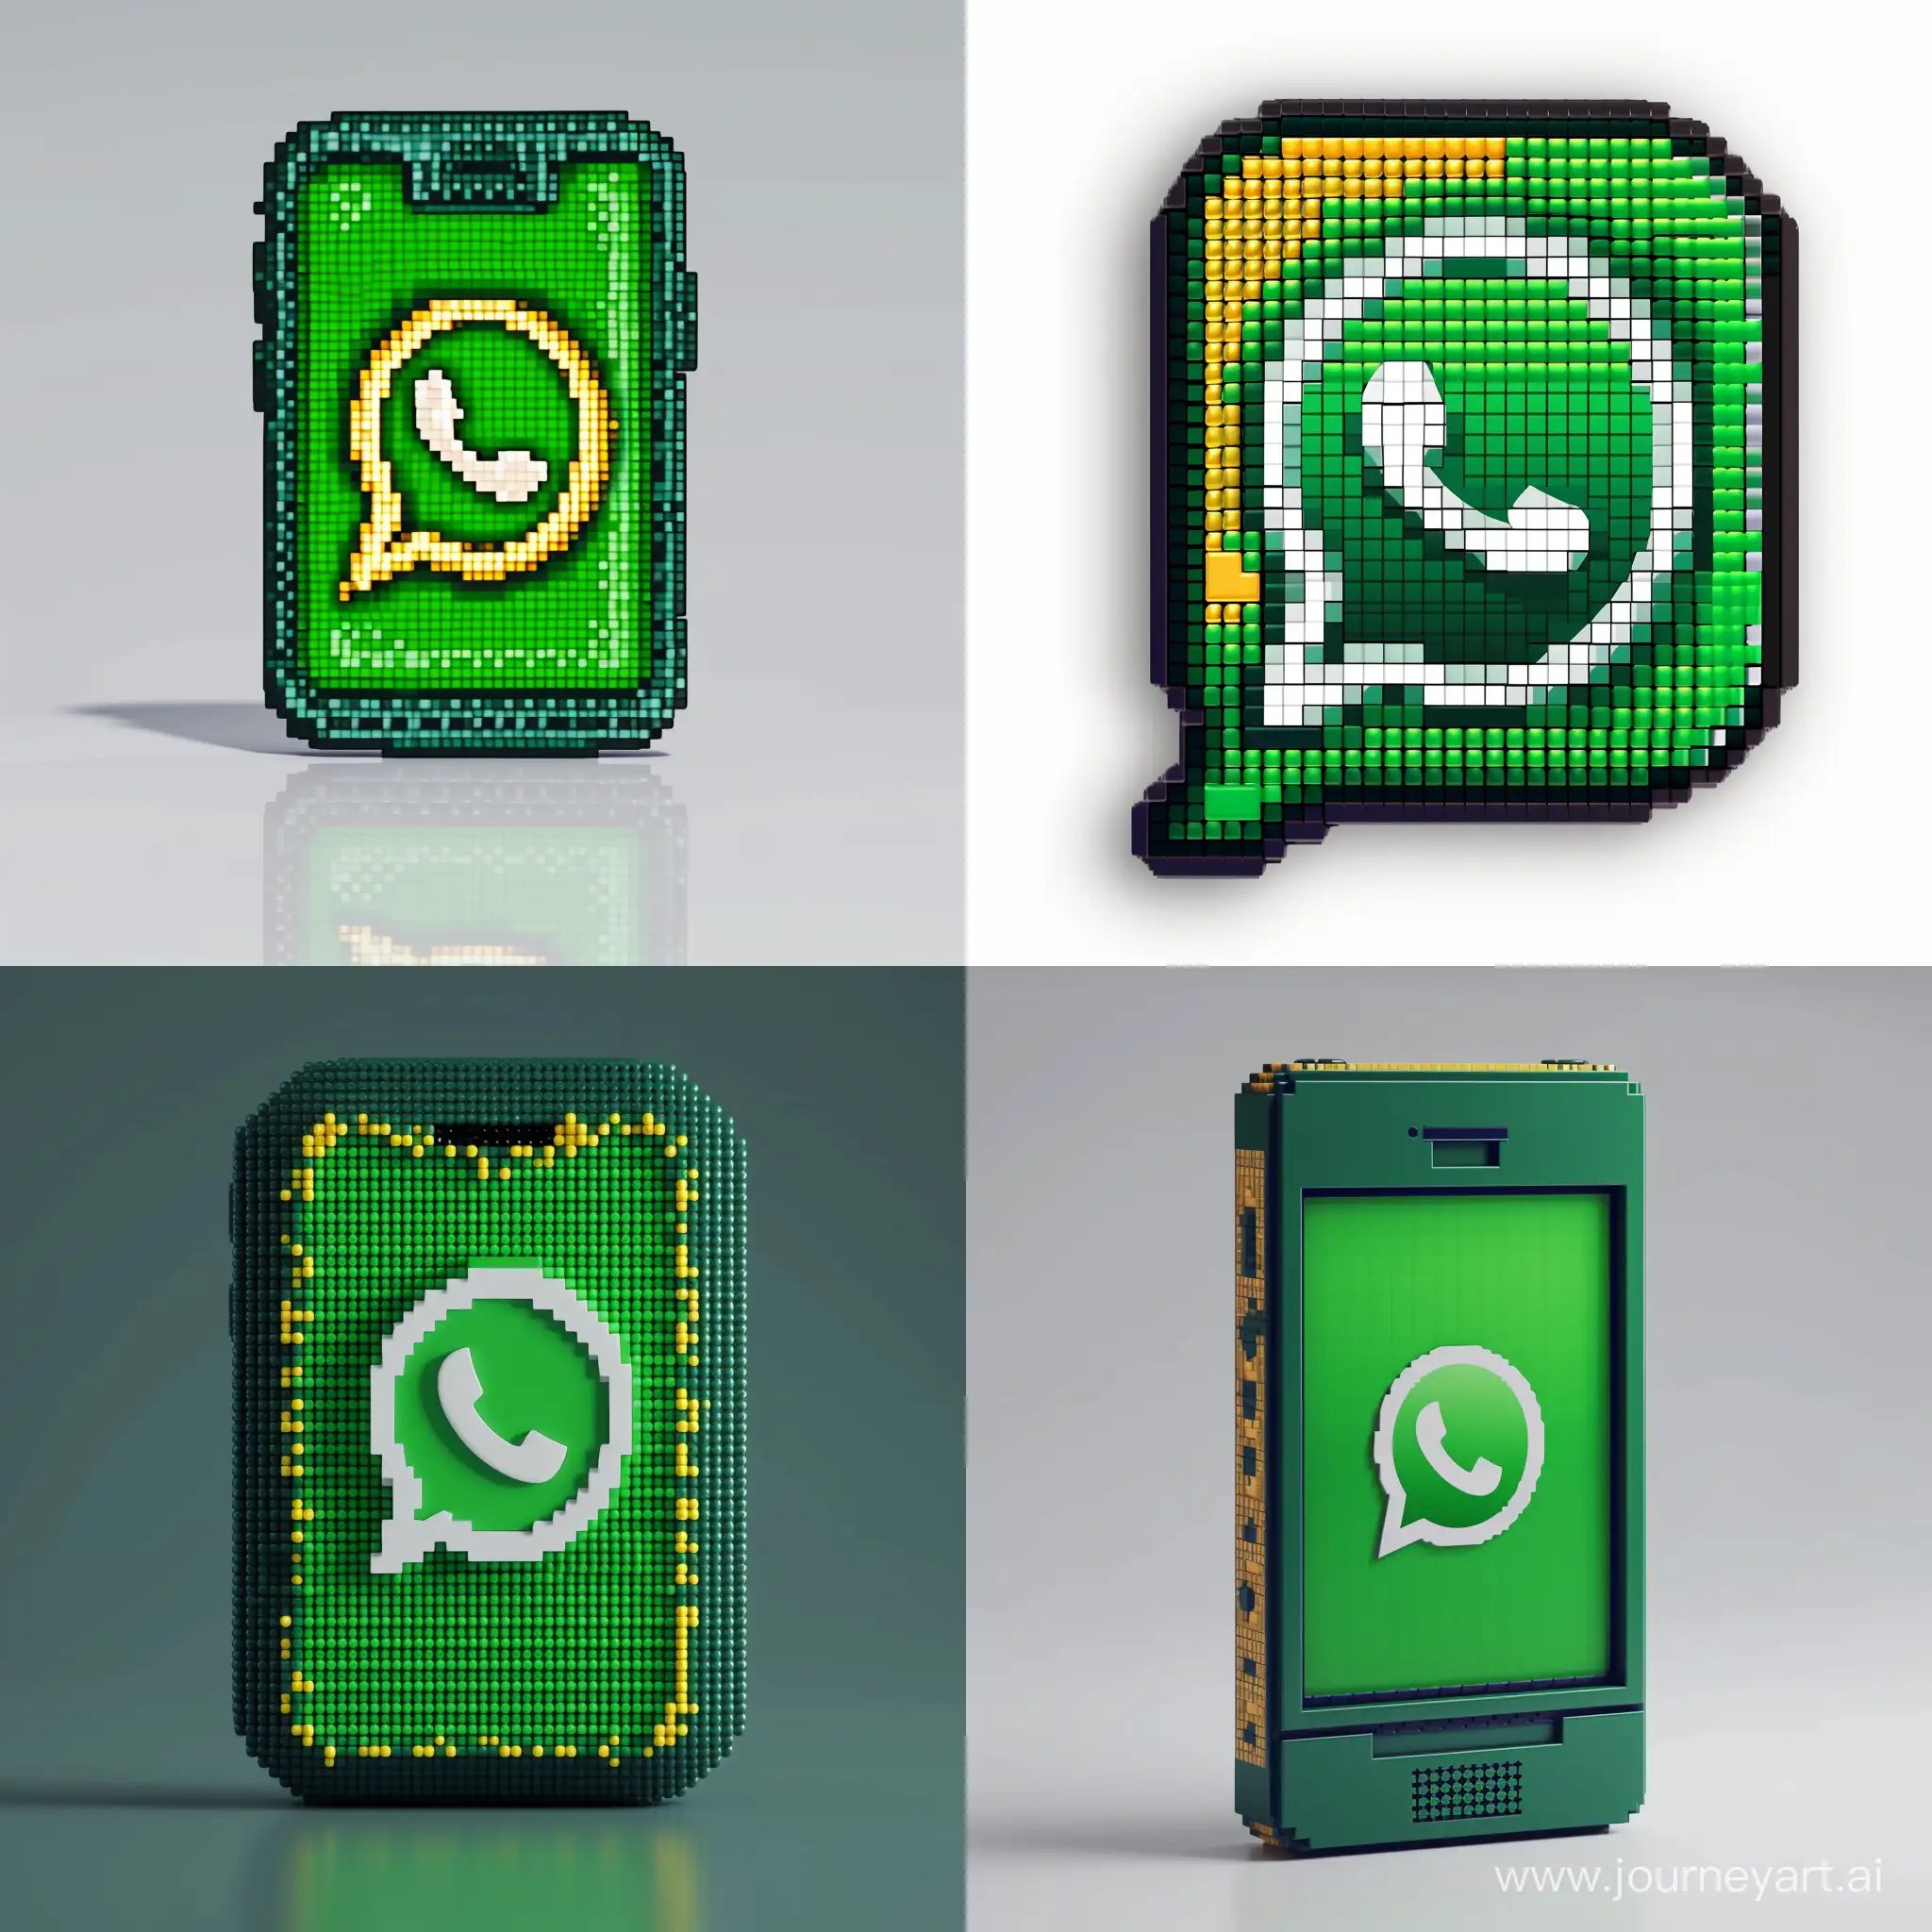 WhatsApp-8Bit-Logo-Pixel-Art-with-Version-6-Aspect-Ratio-11